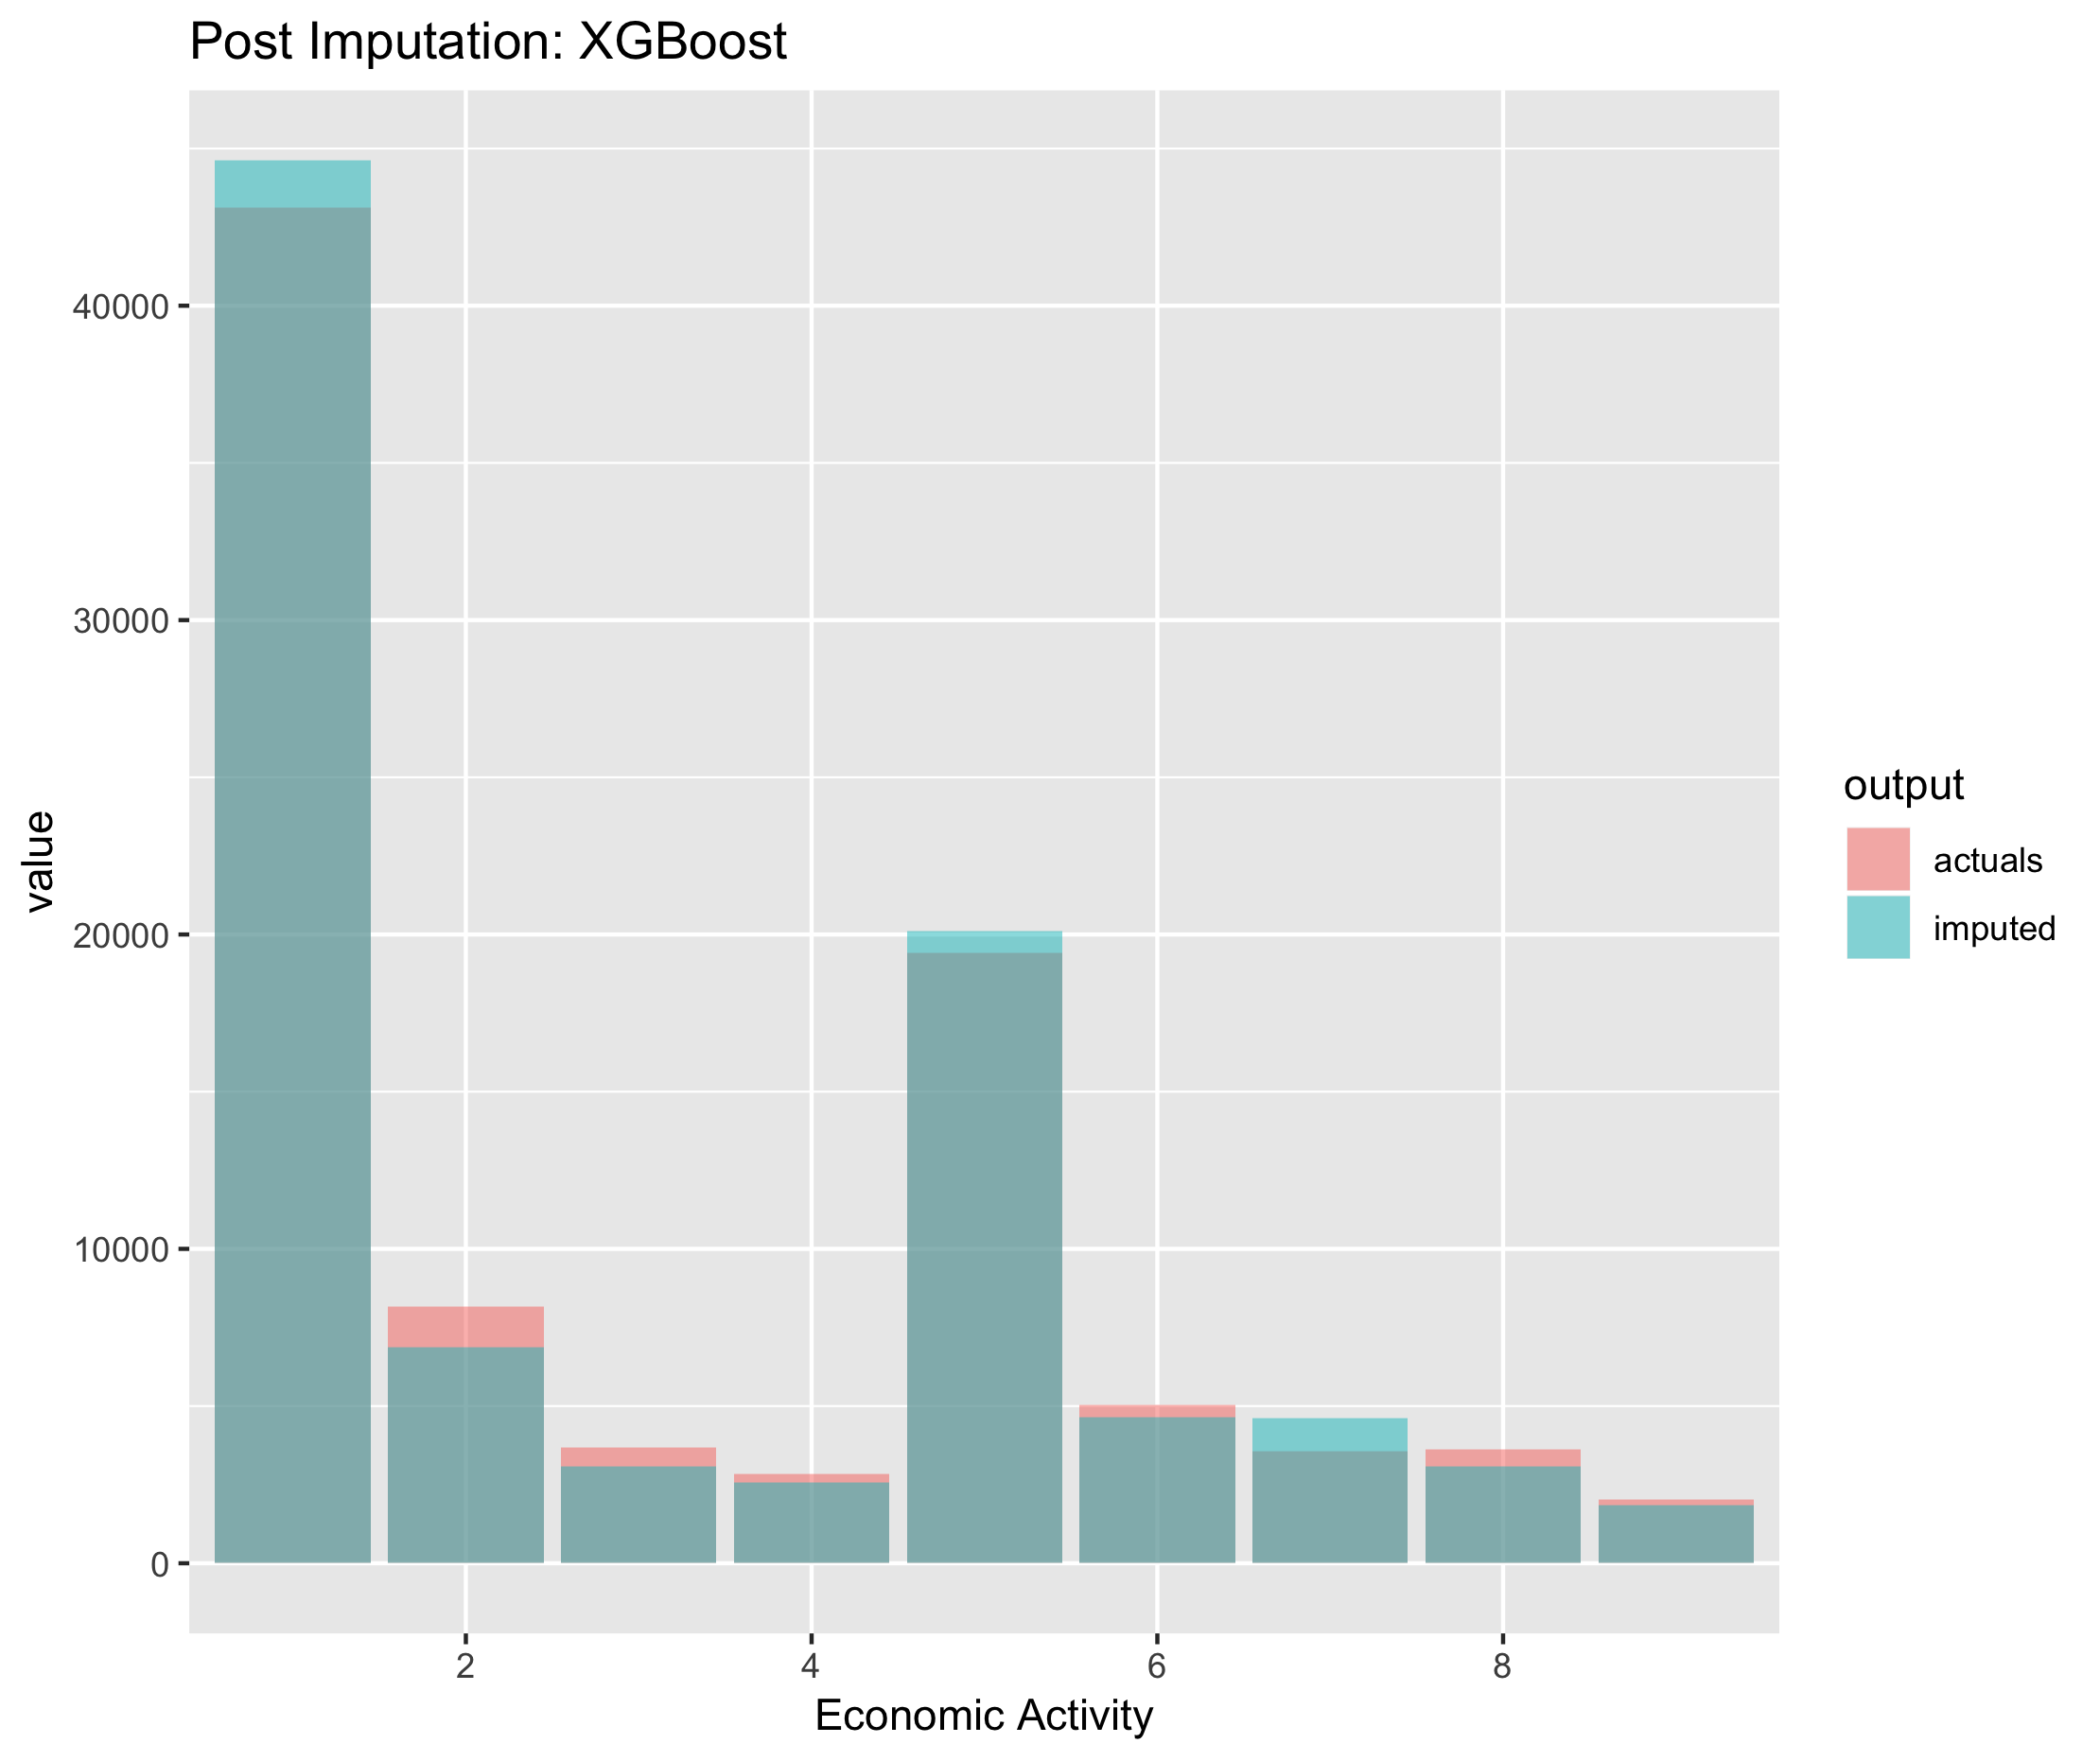 Figure 6.7. Post imputation distribution of economic activity using XGBoost imputation